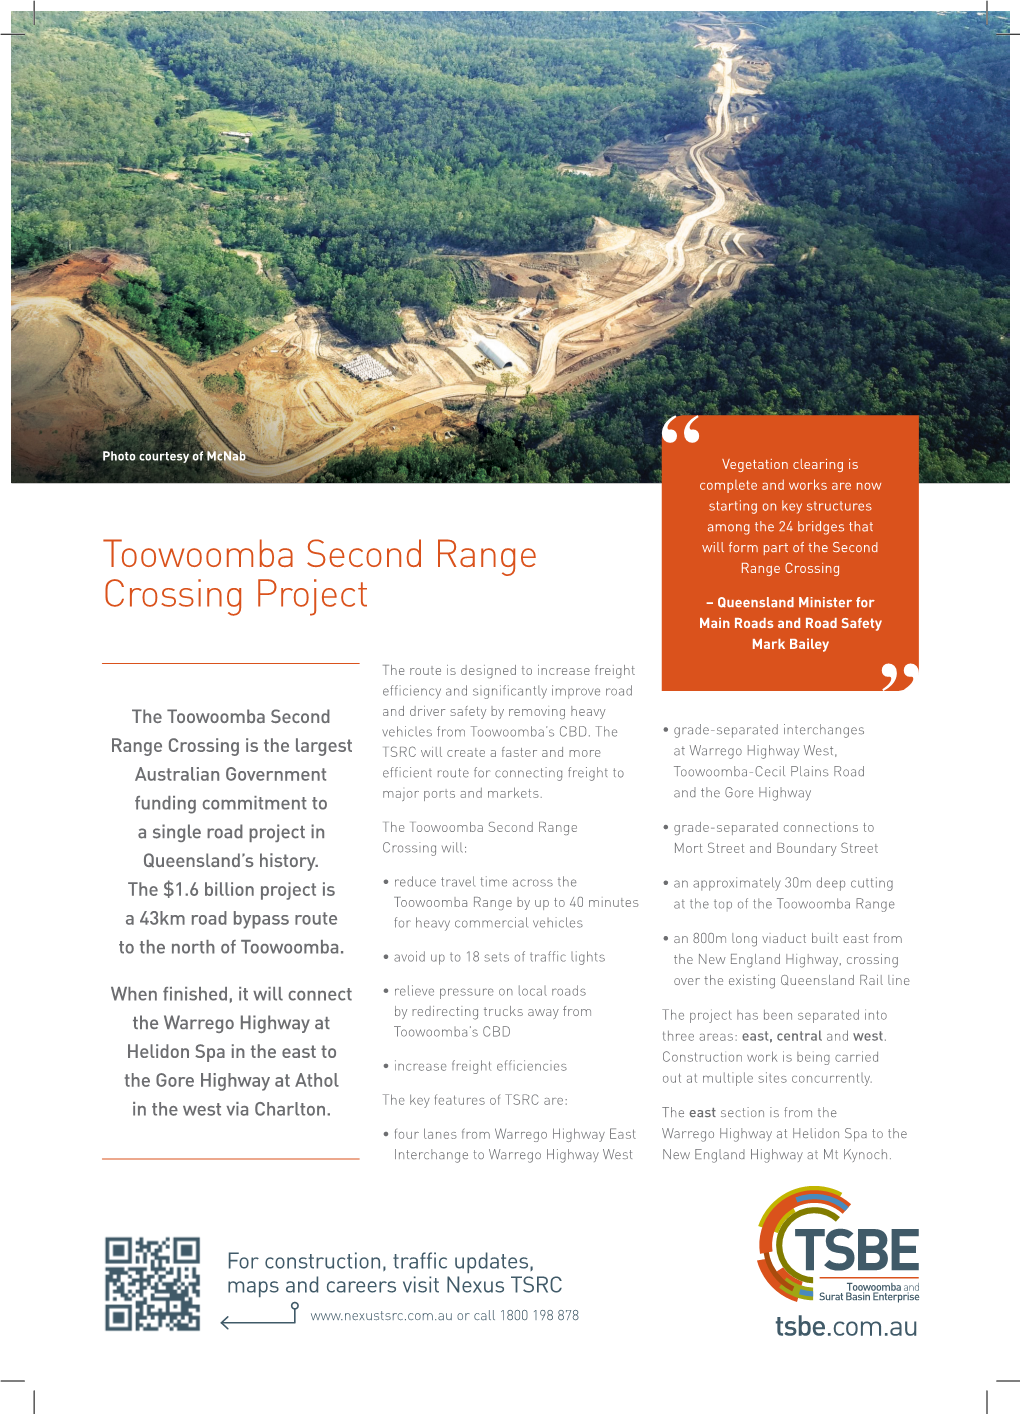 Toowoomba Second Range Crossing Project Training Andskills Development